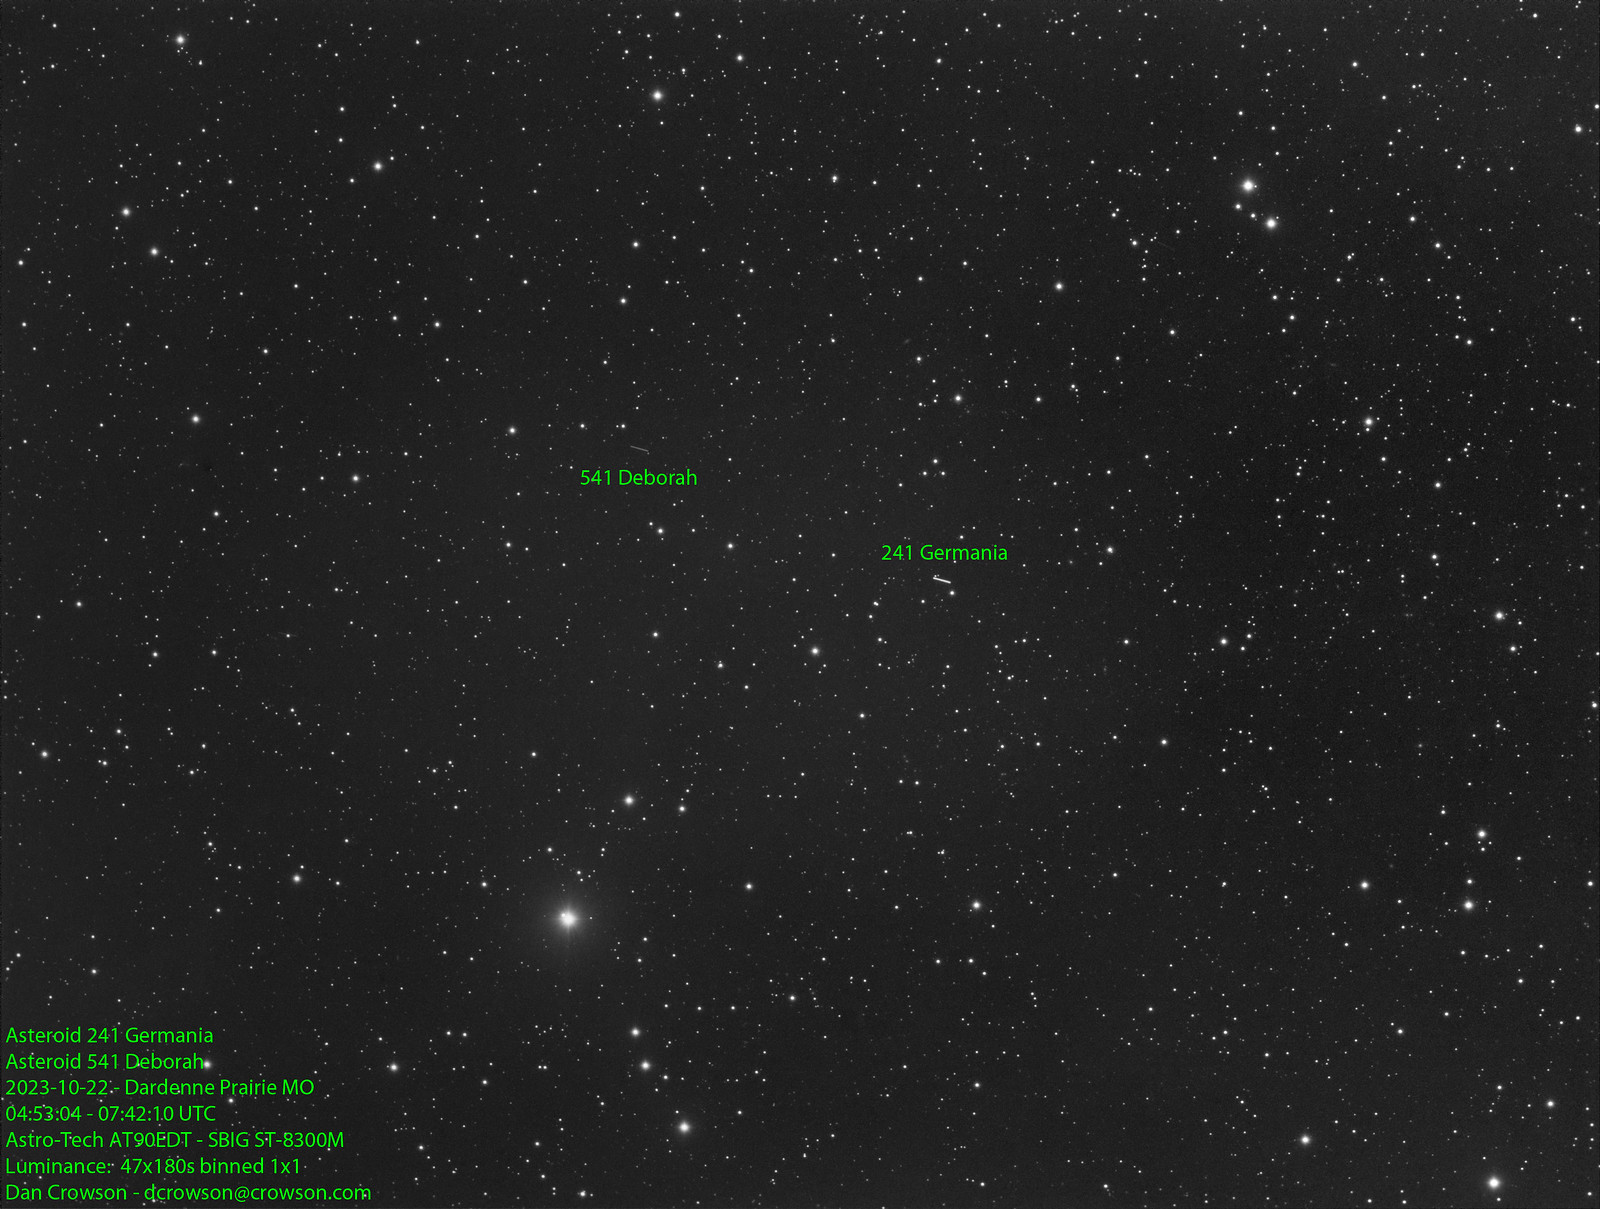 Asteroid 541 Deborah - 47x180s - 2023-10-22